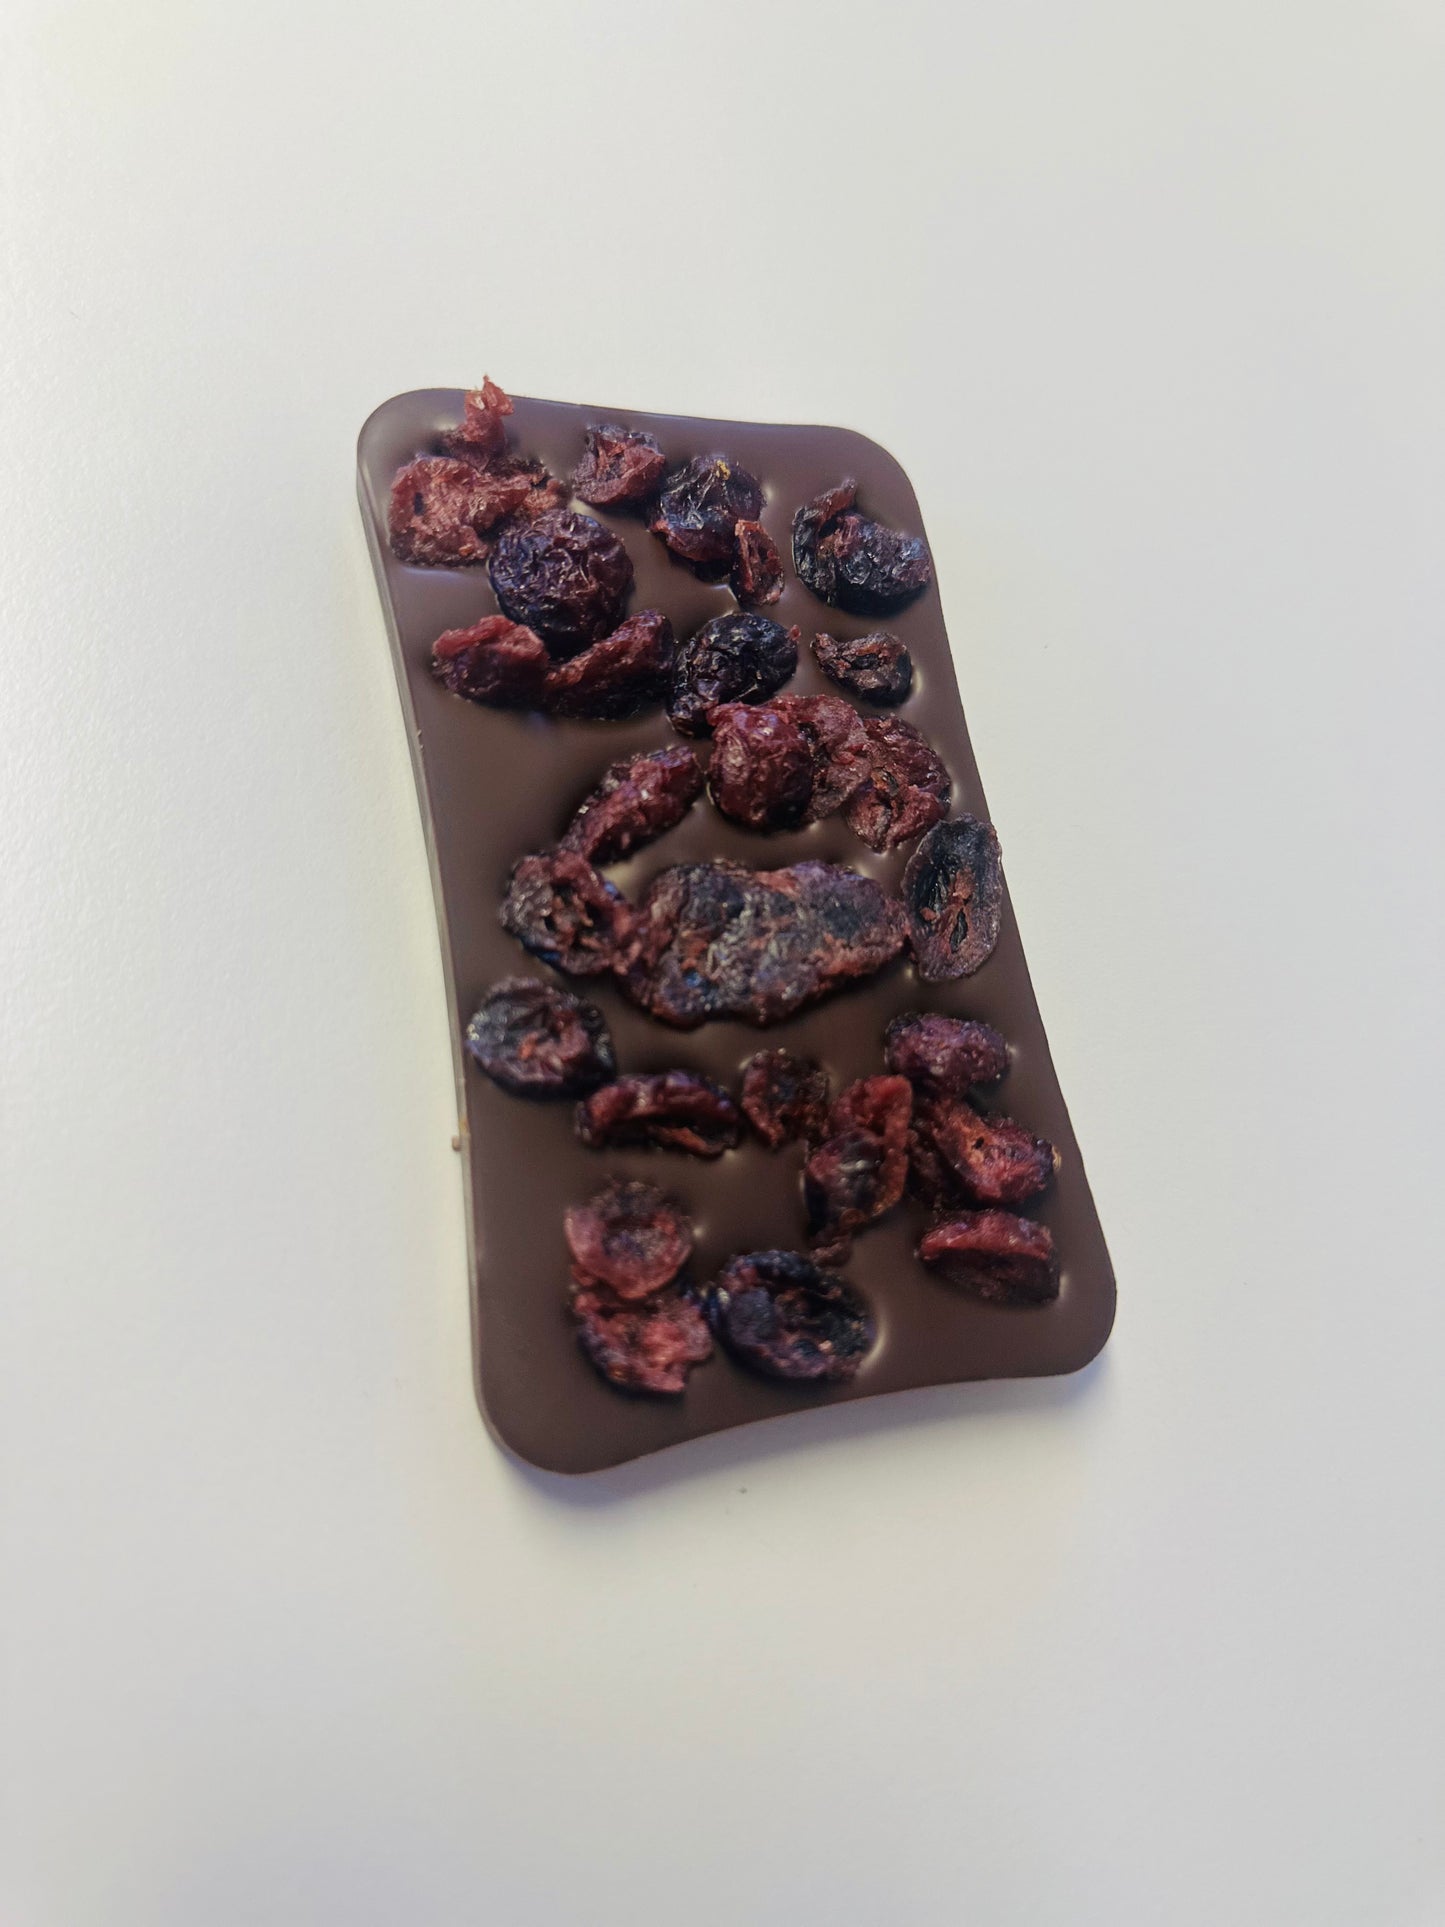 DARK CHOCOLATE SLAB with cranberries